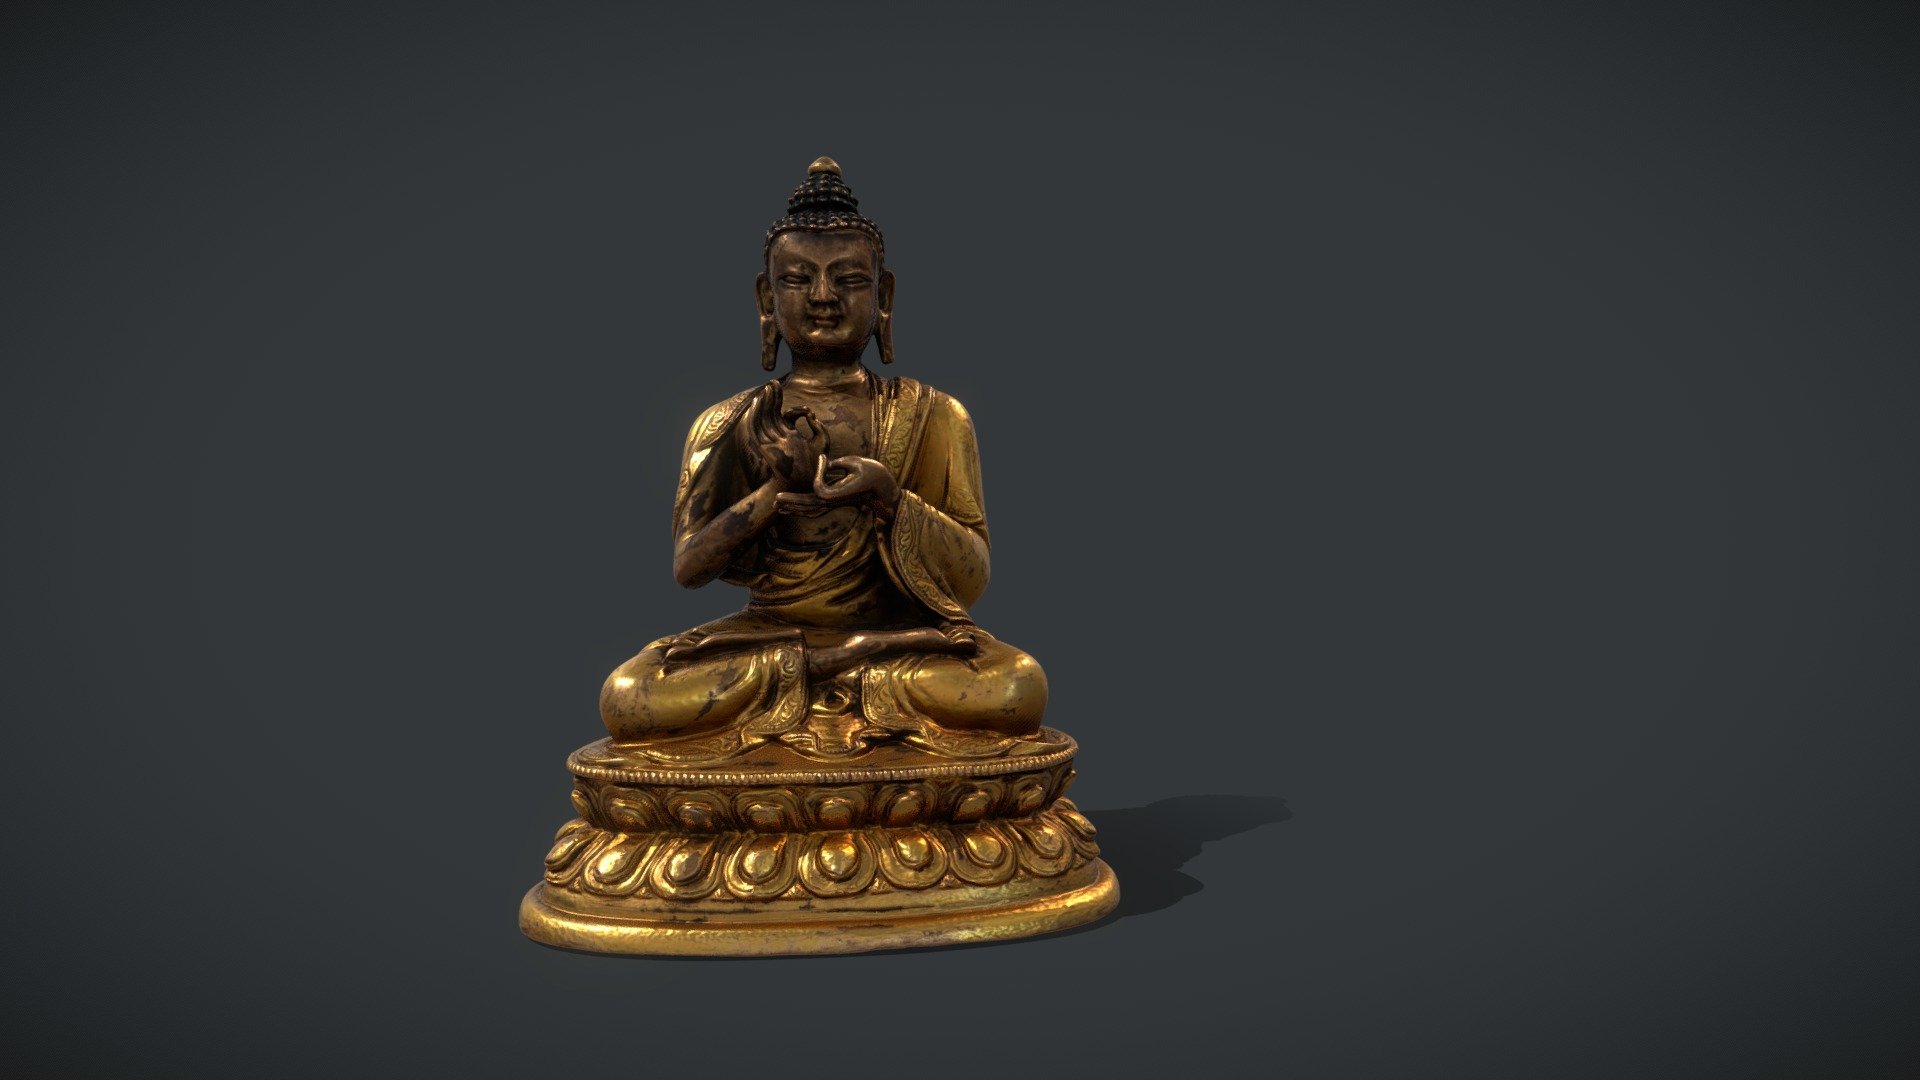 the statue of Buddha